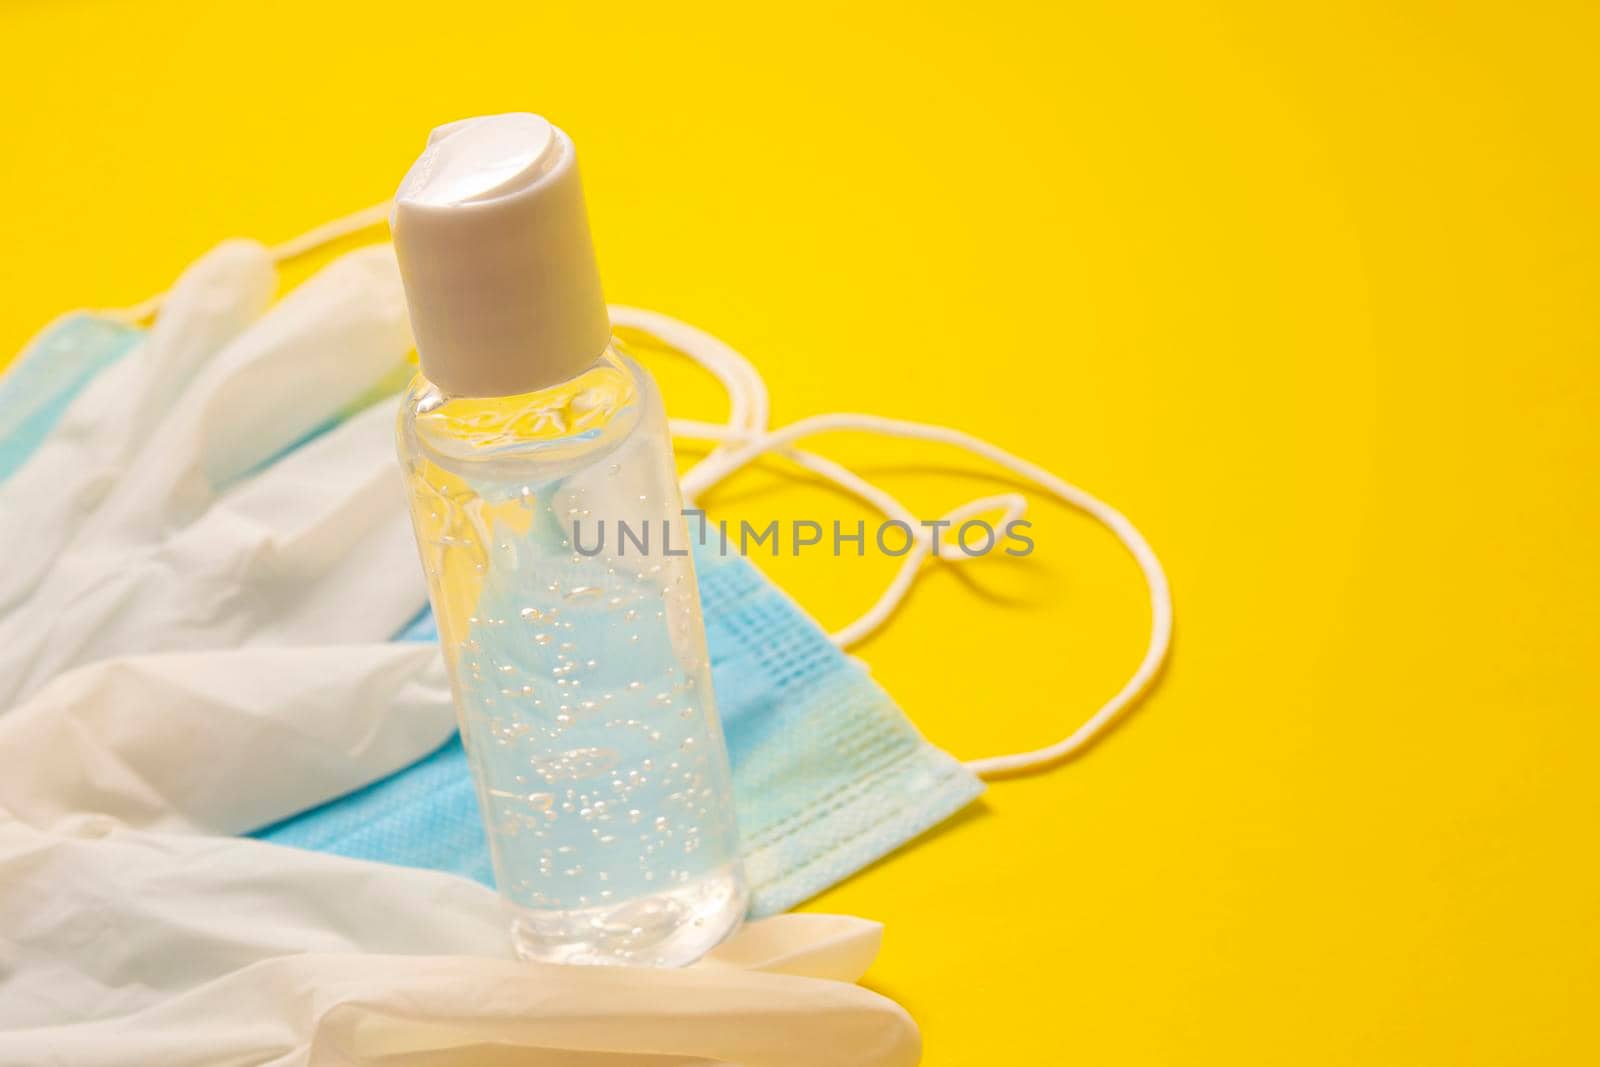 medical latex gloves, and sanitizer gel by hayaship